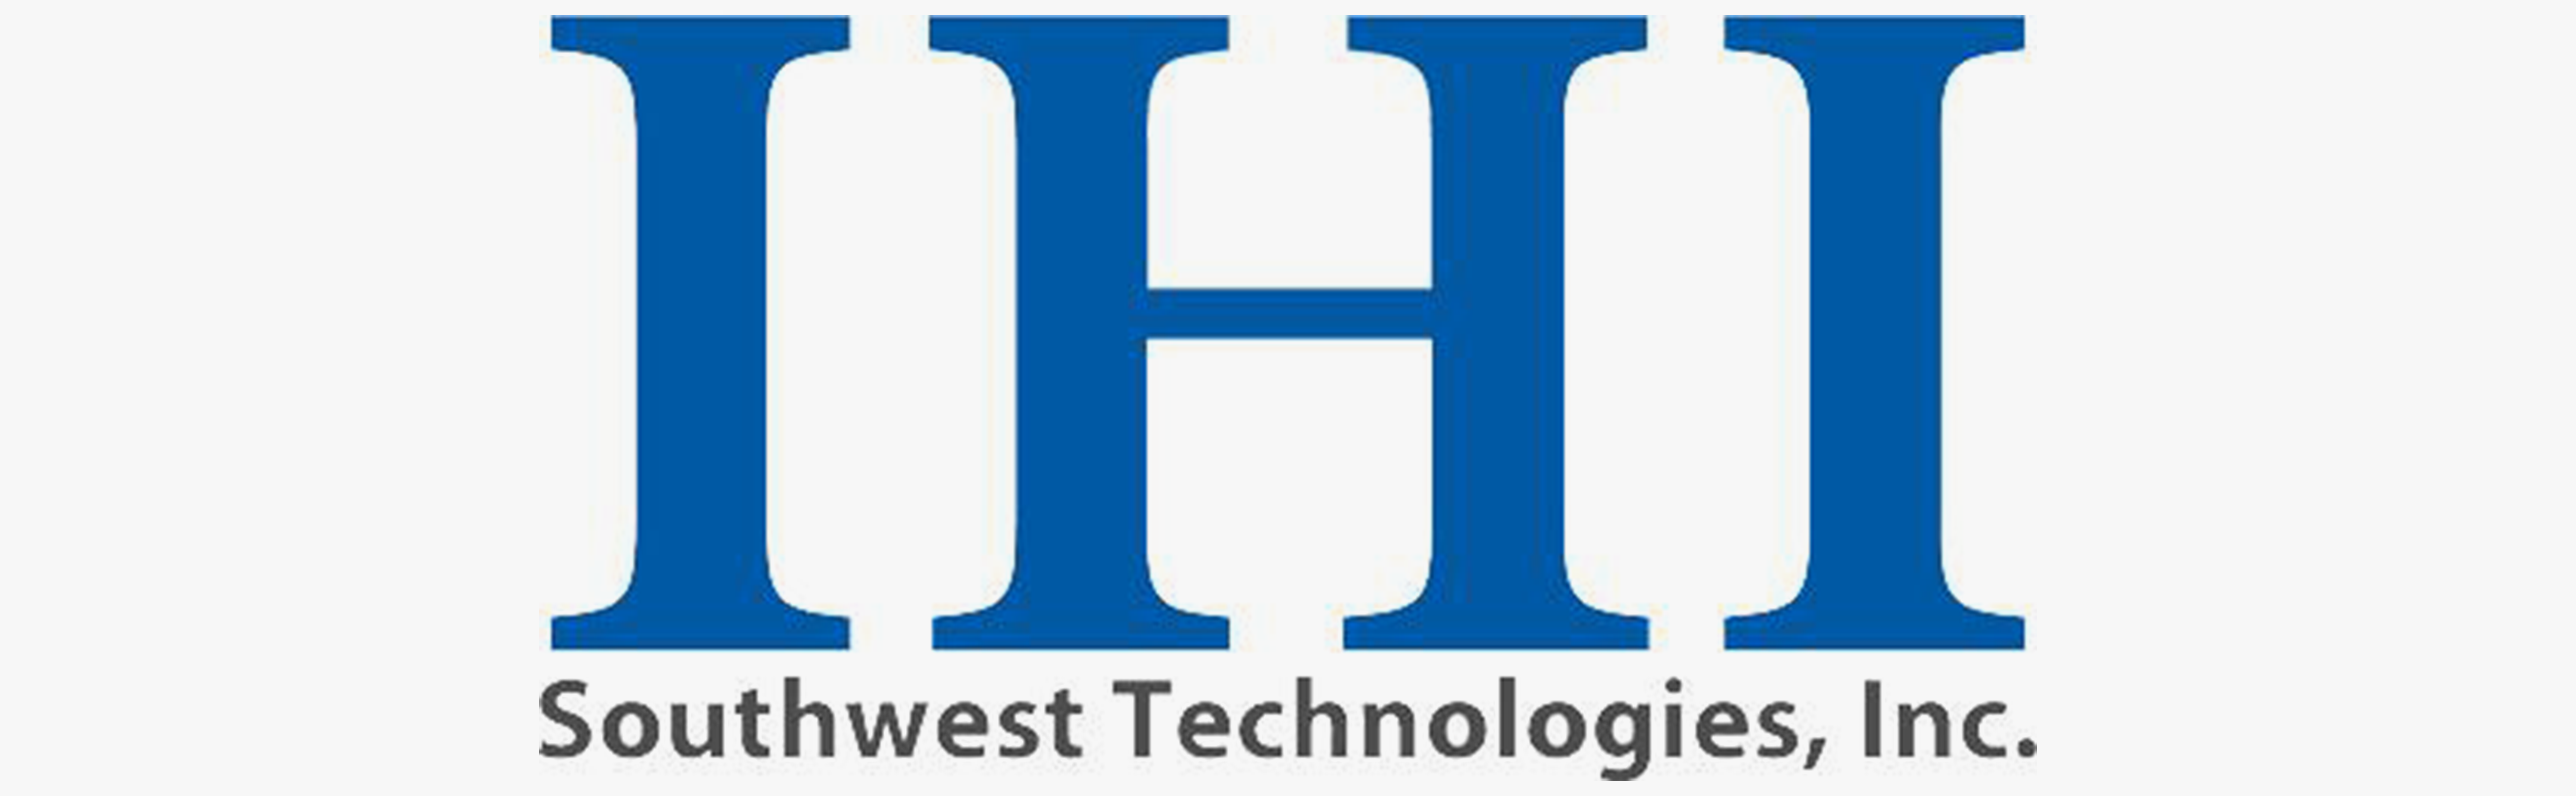 Southwest Technologies, Inc.